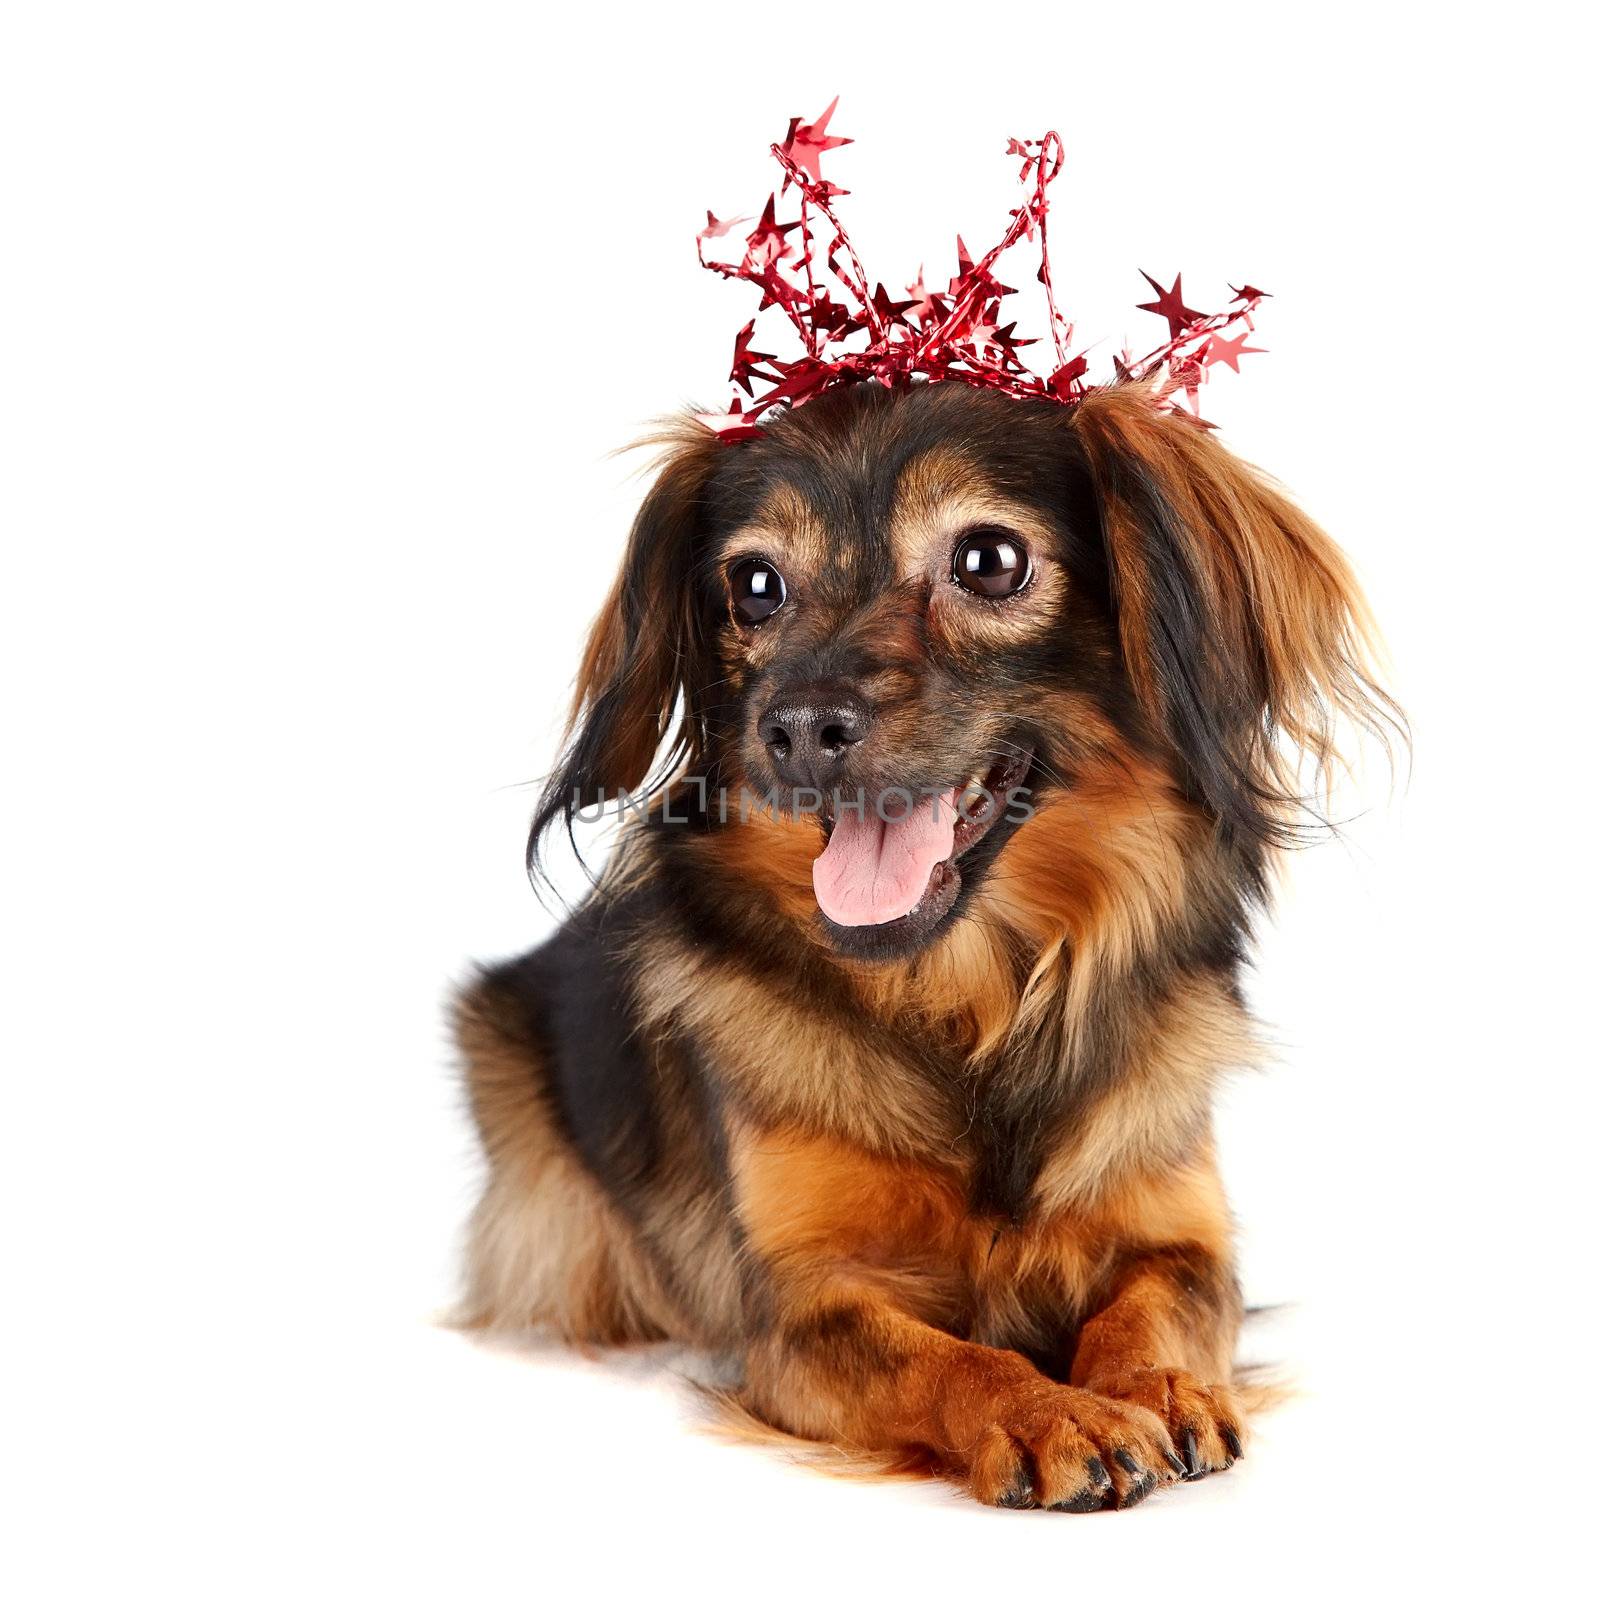 Decorative dog in a crown with stars by Azaliya